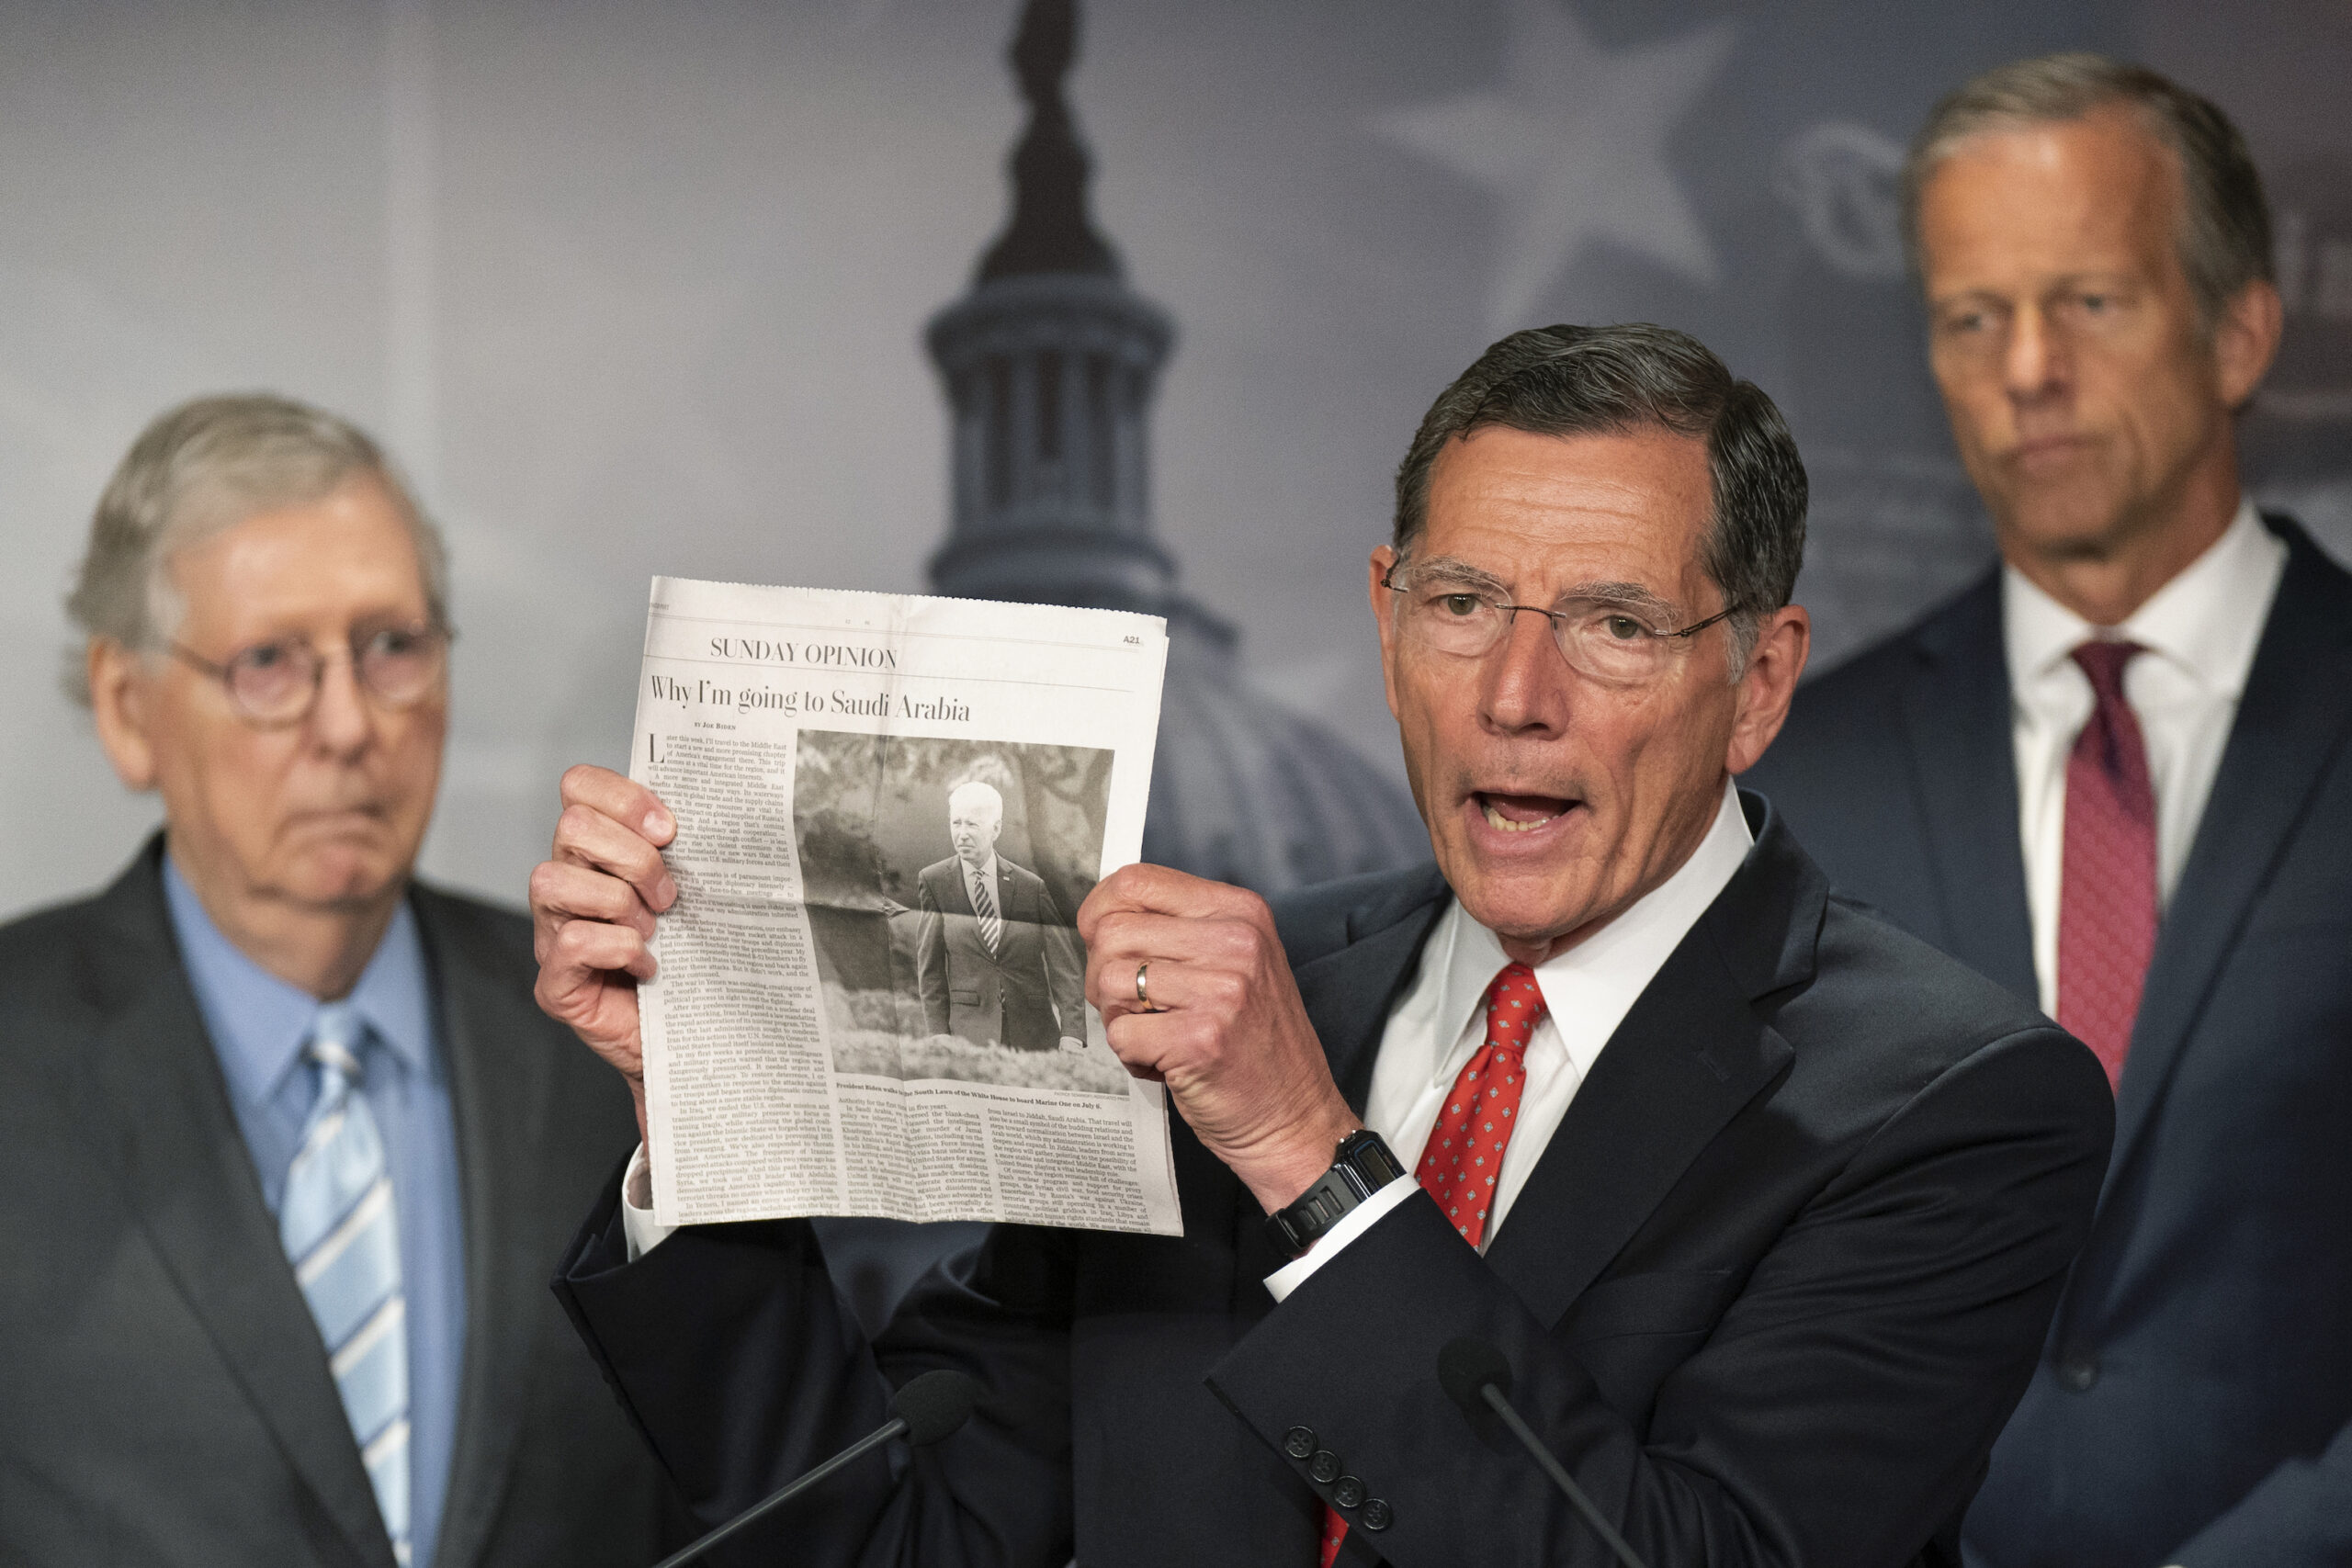 U.S. senator holding up a newspaper clip